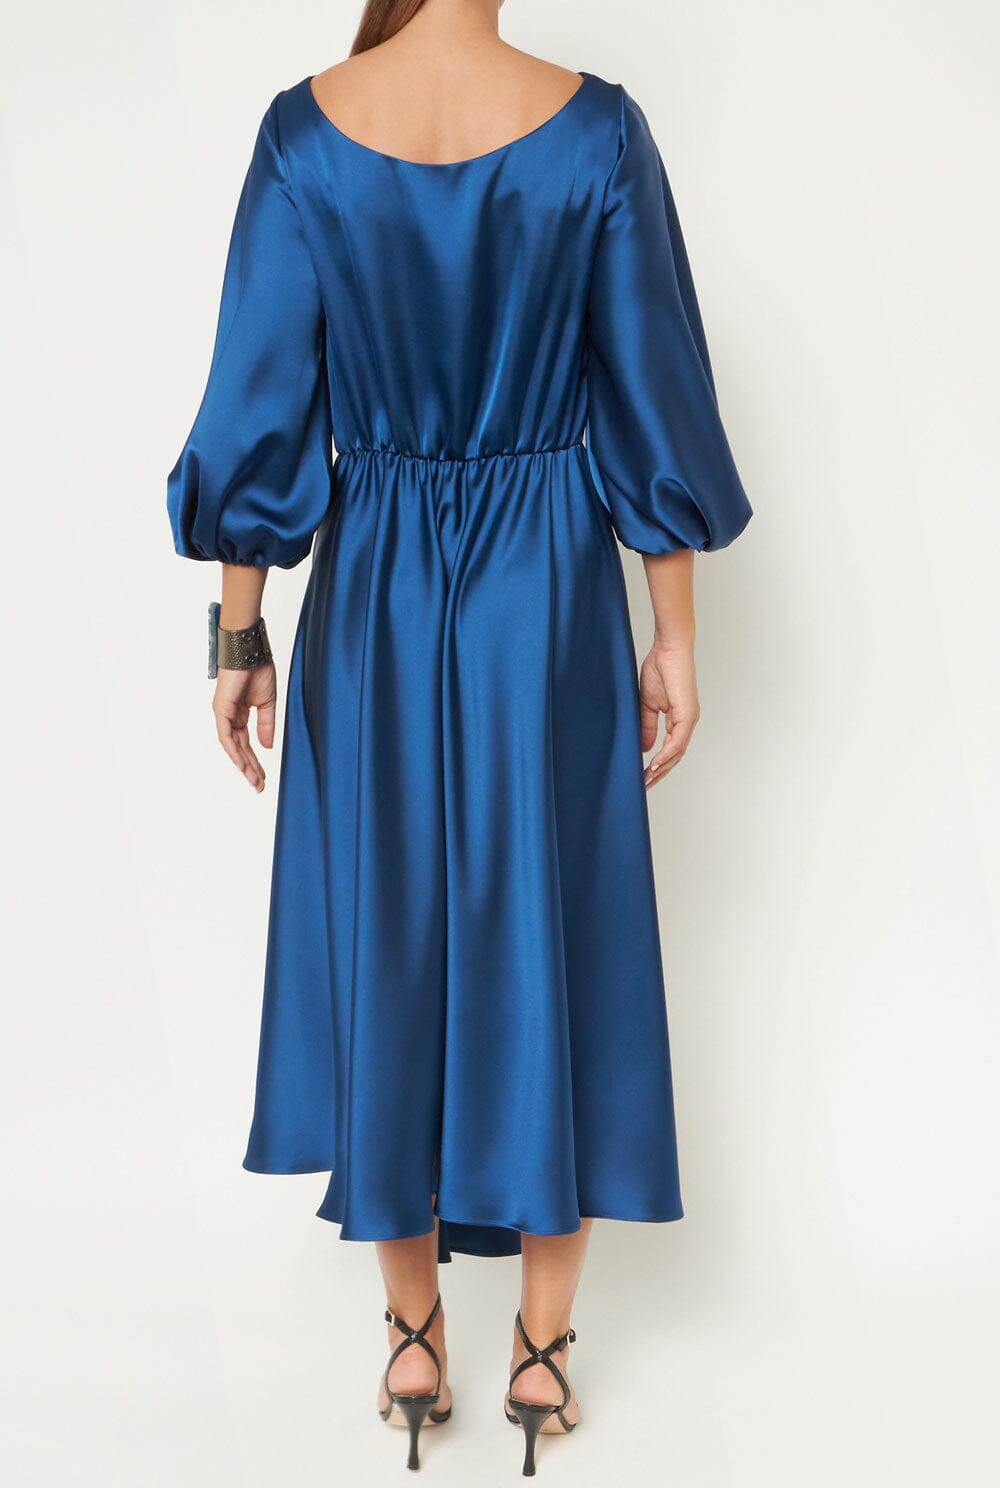 Vestido Tilda Azulon Dresses Duyos 